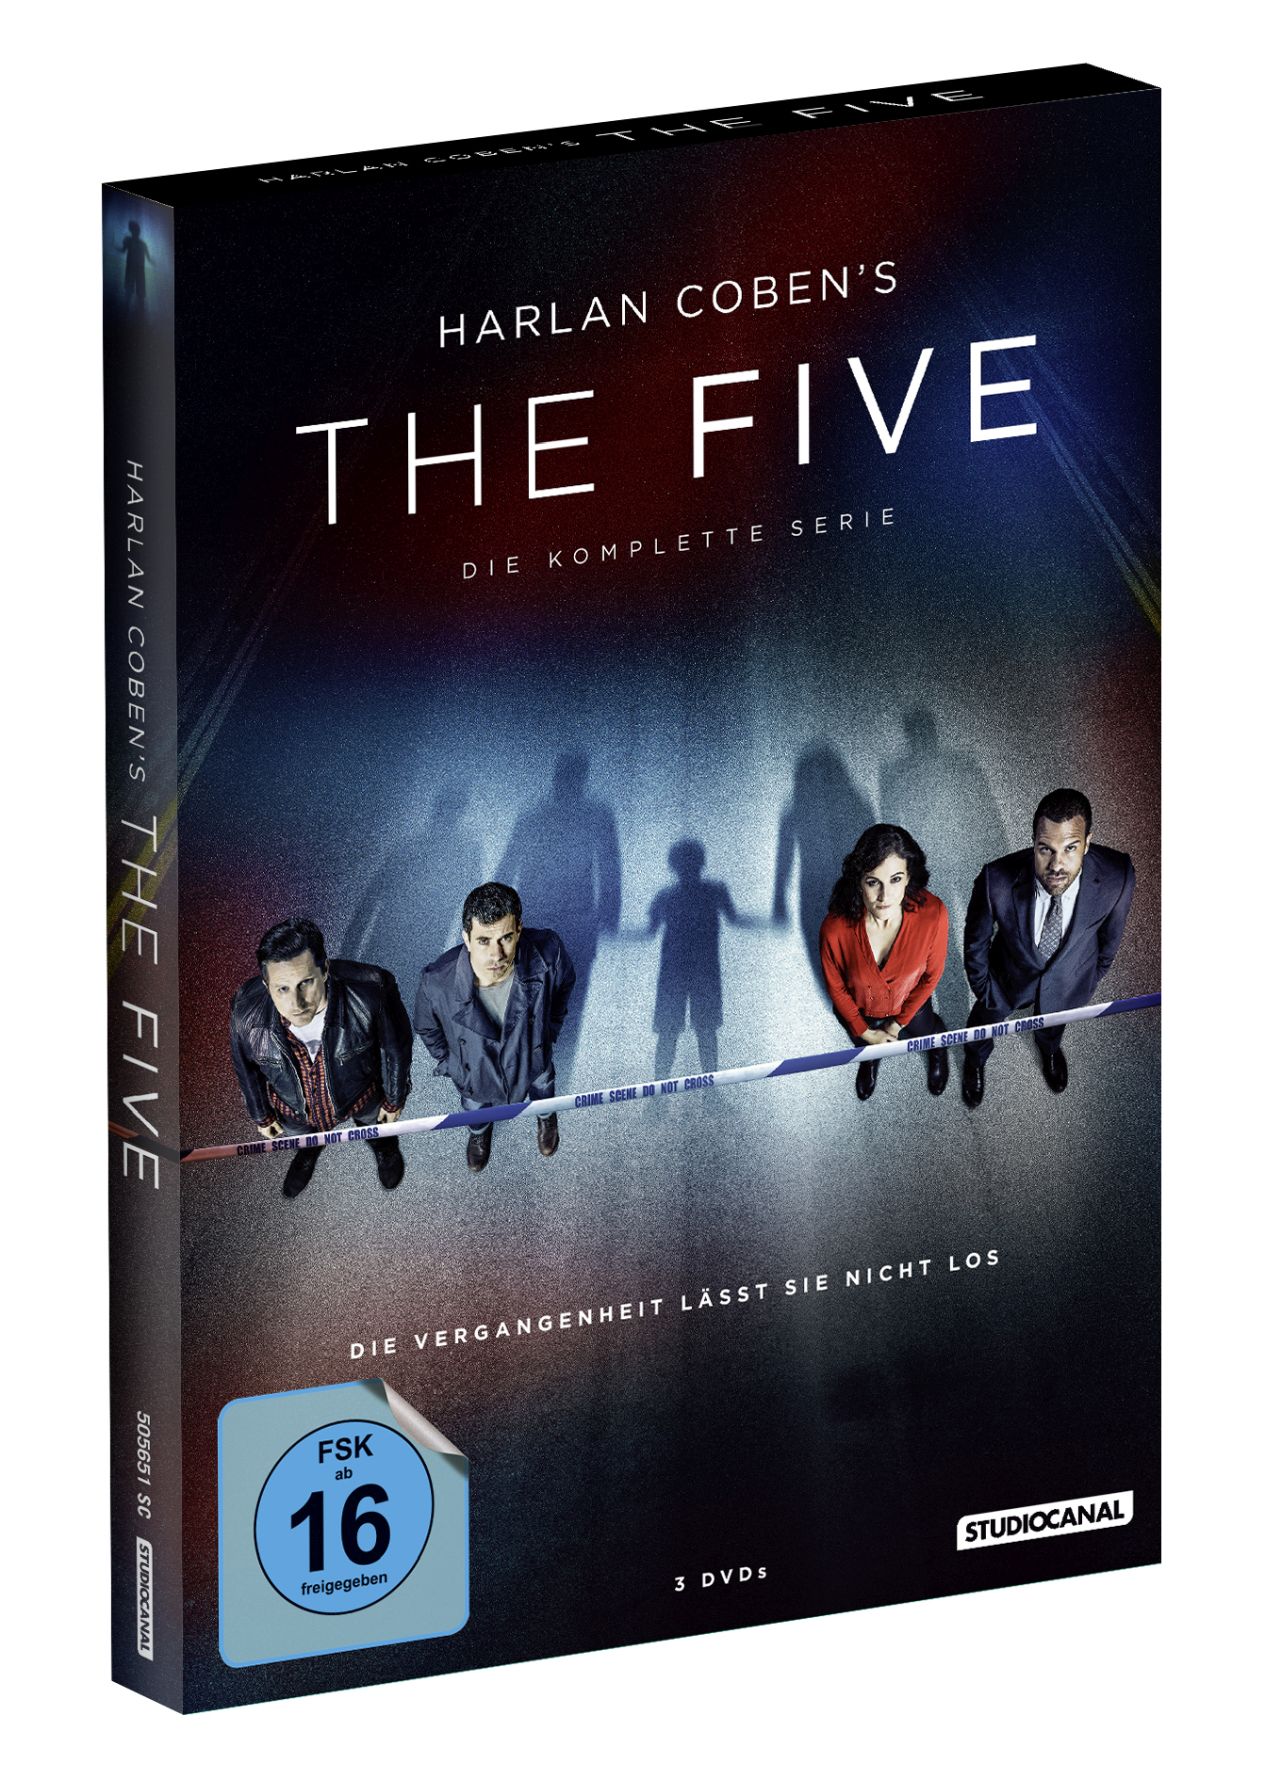 The Five - Die komplette Serie (3 DVDs) Image 2